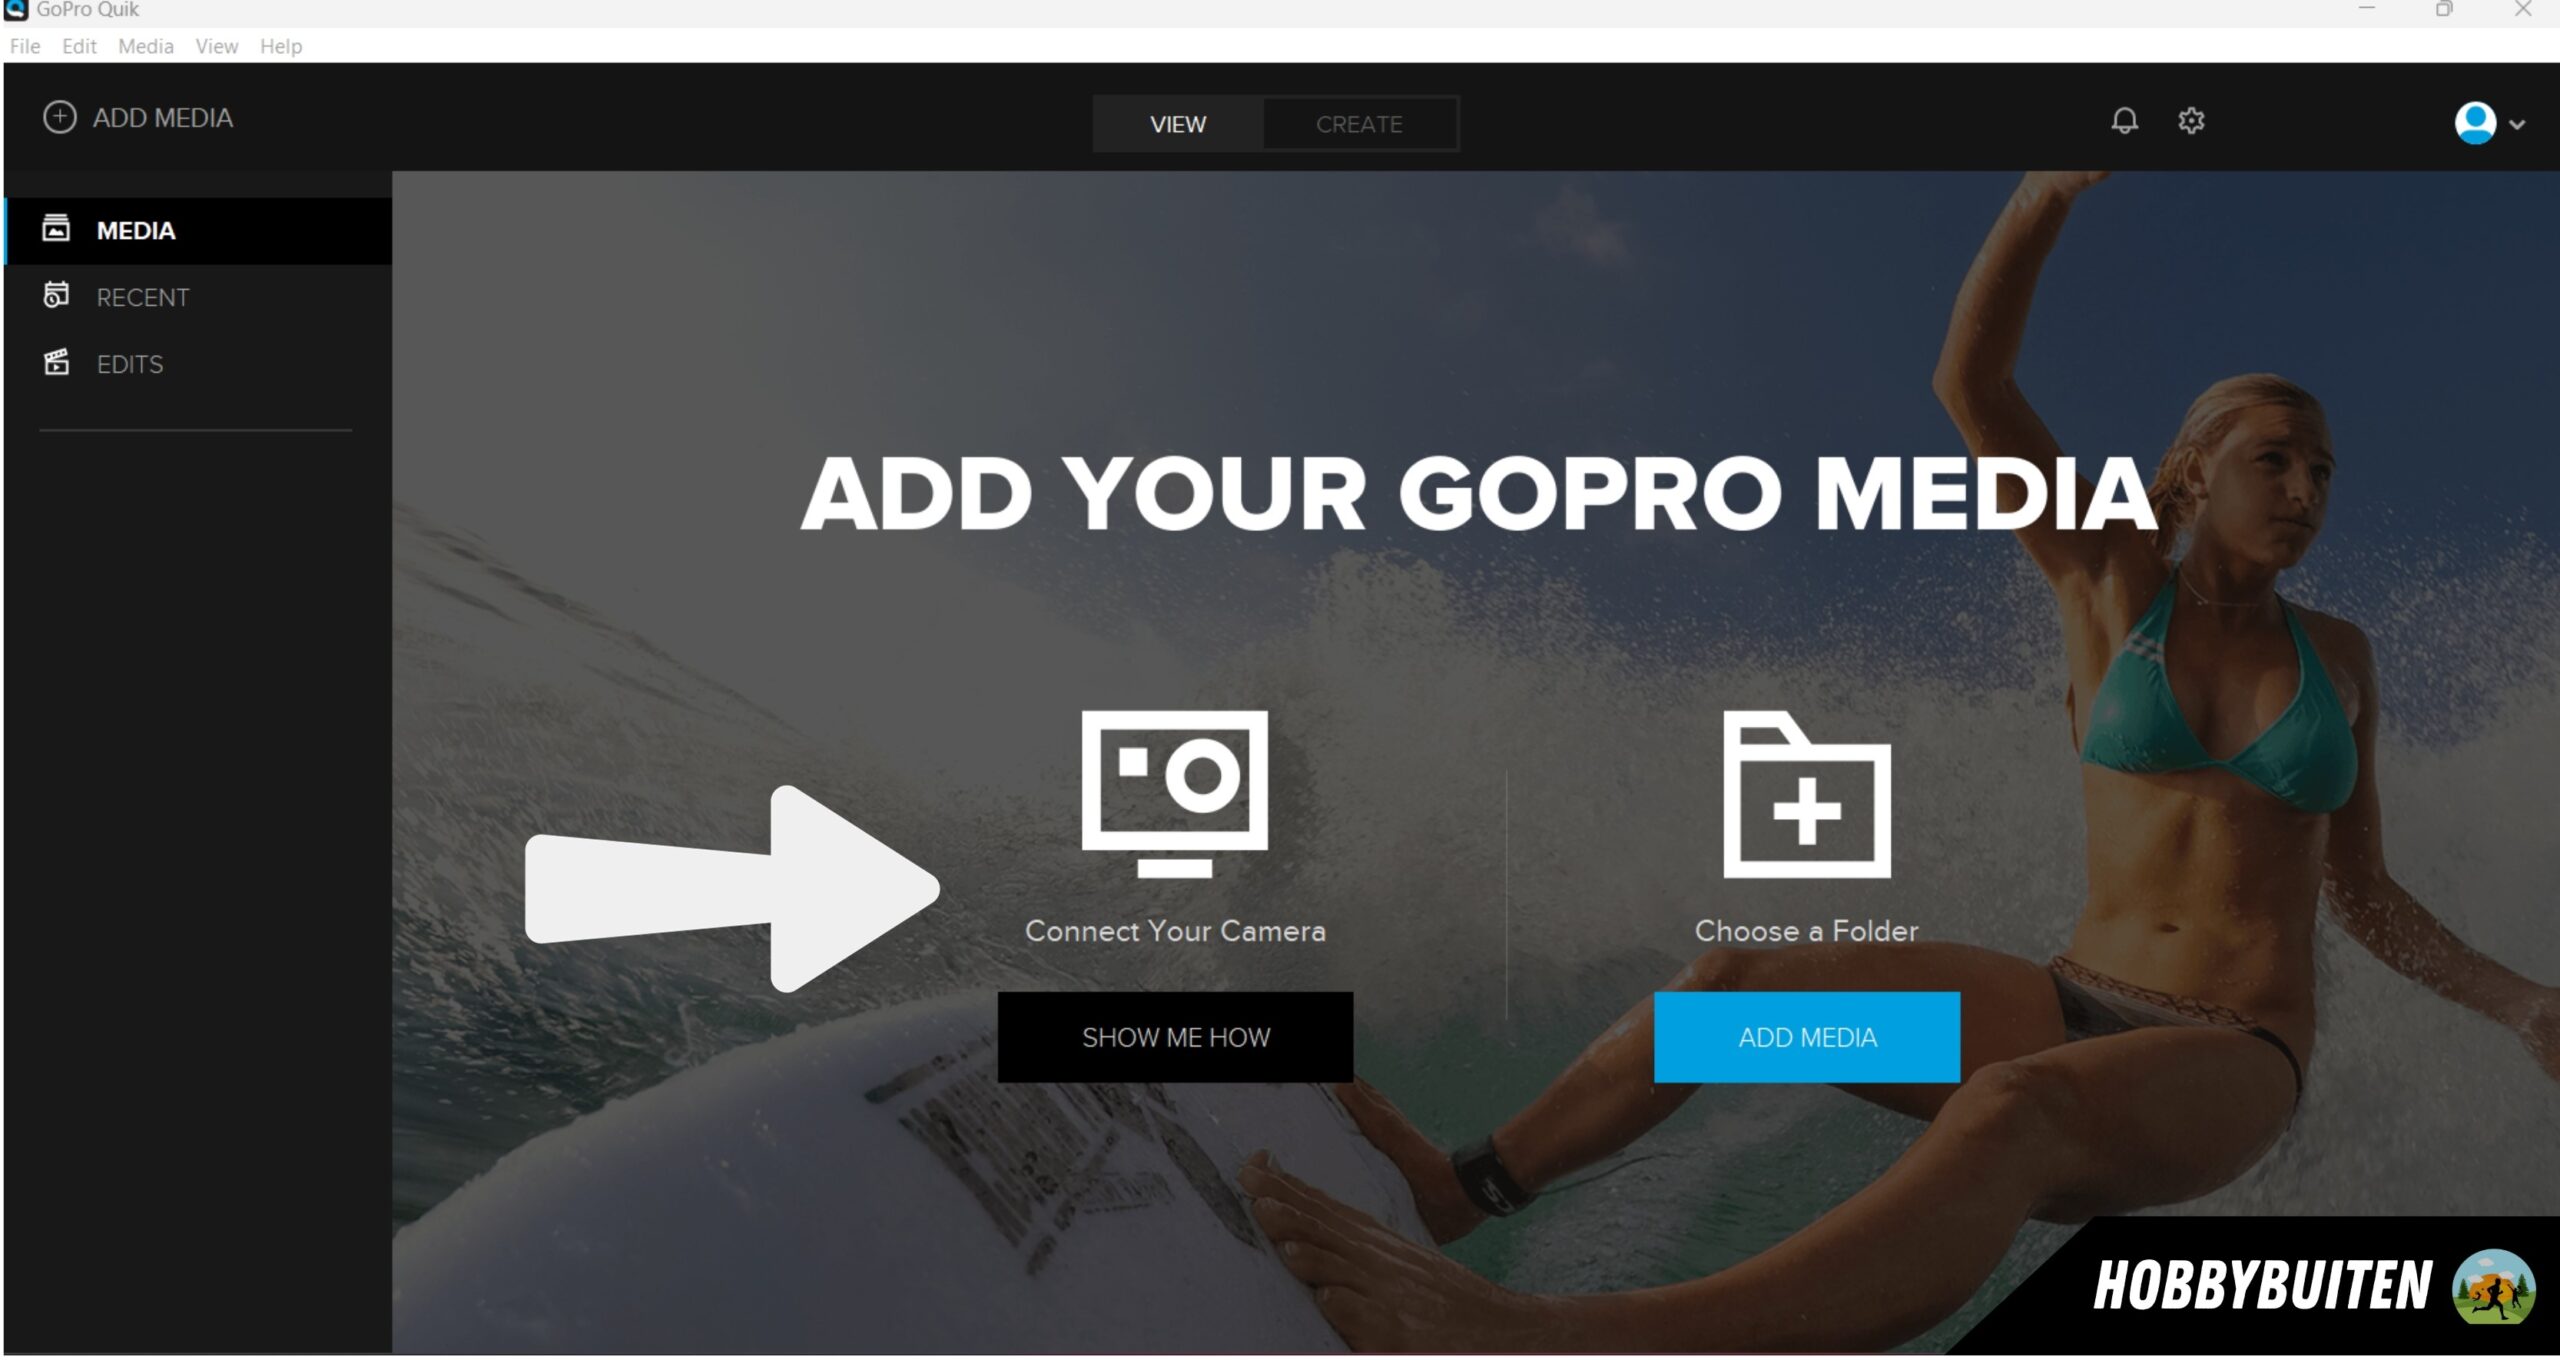 GoPro Quick App